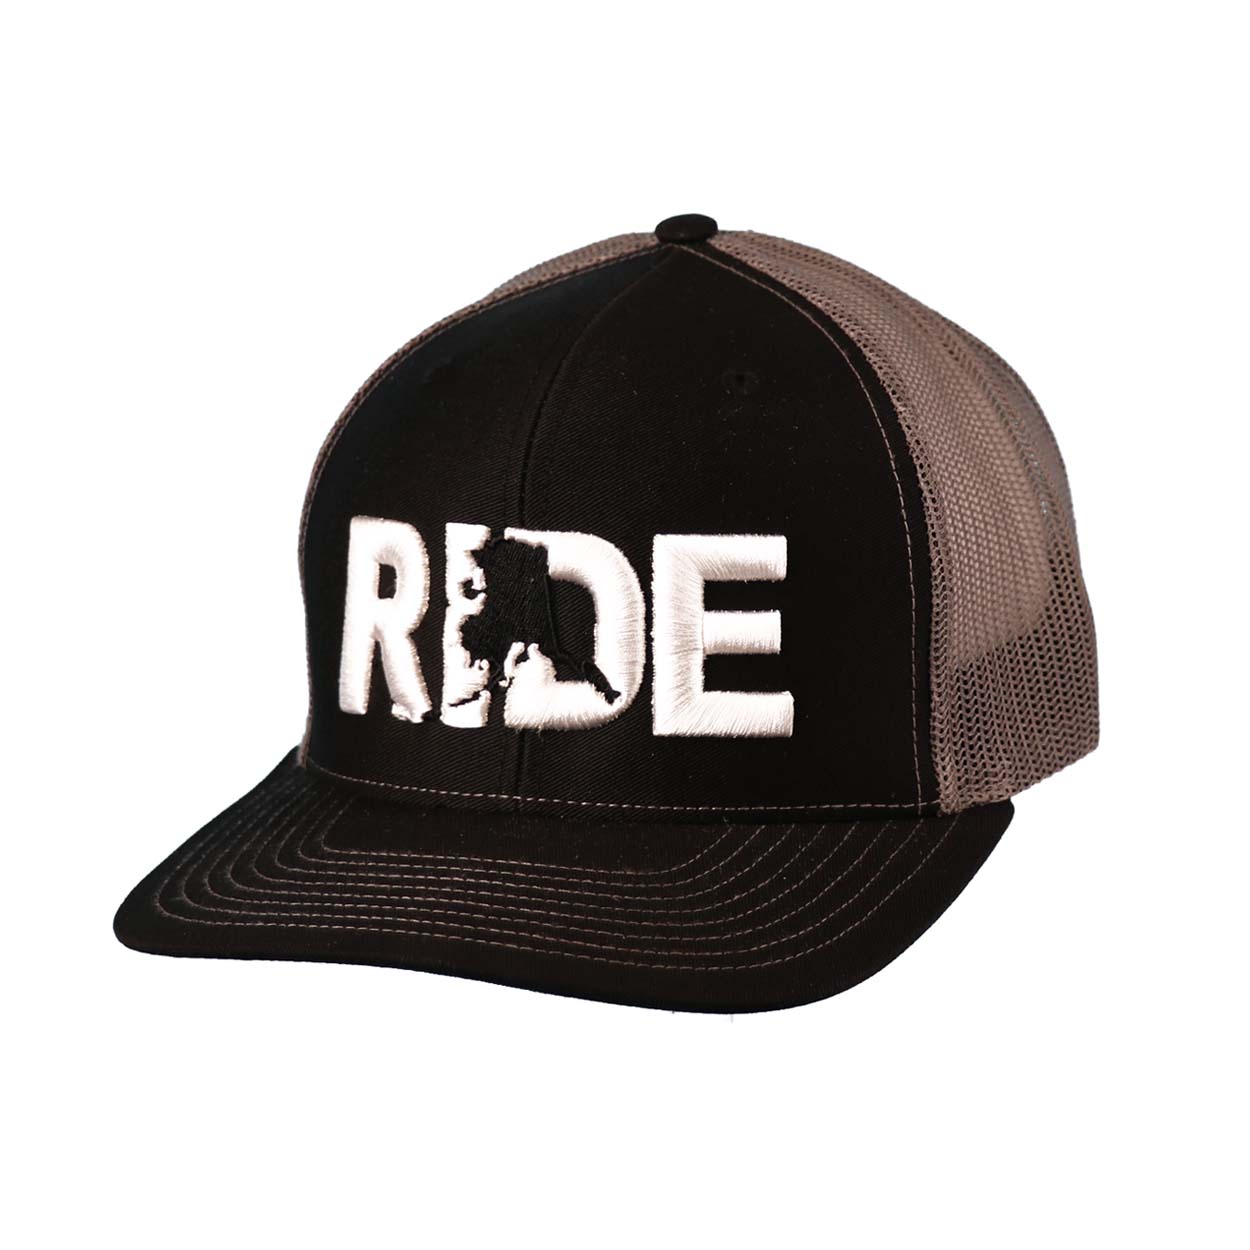 Ride Alaska Classic Embroidered Snapback Trucker Hat Black/Charcoal